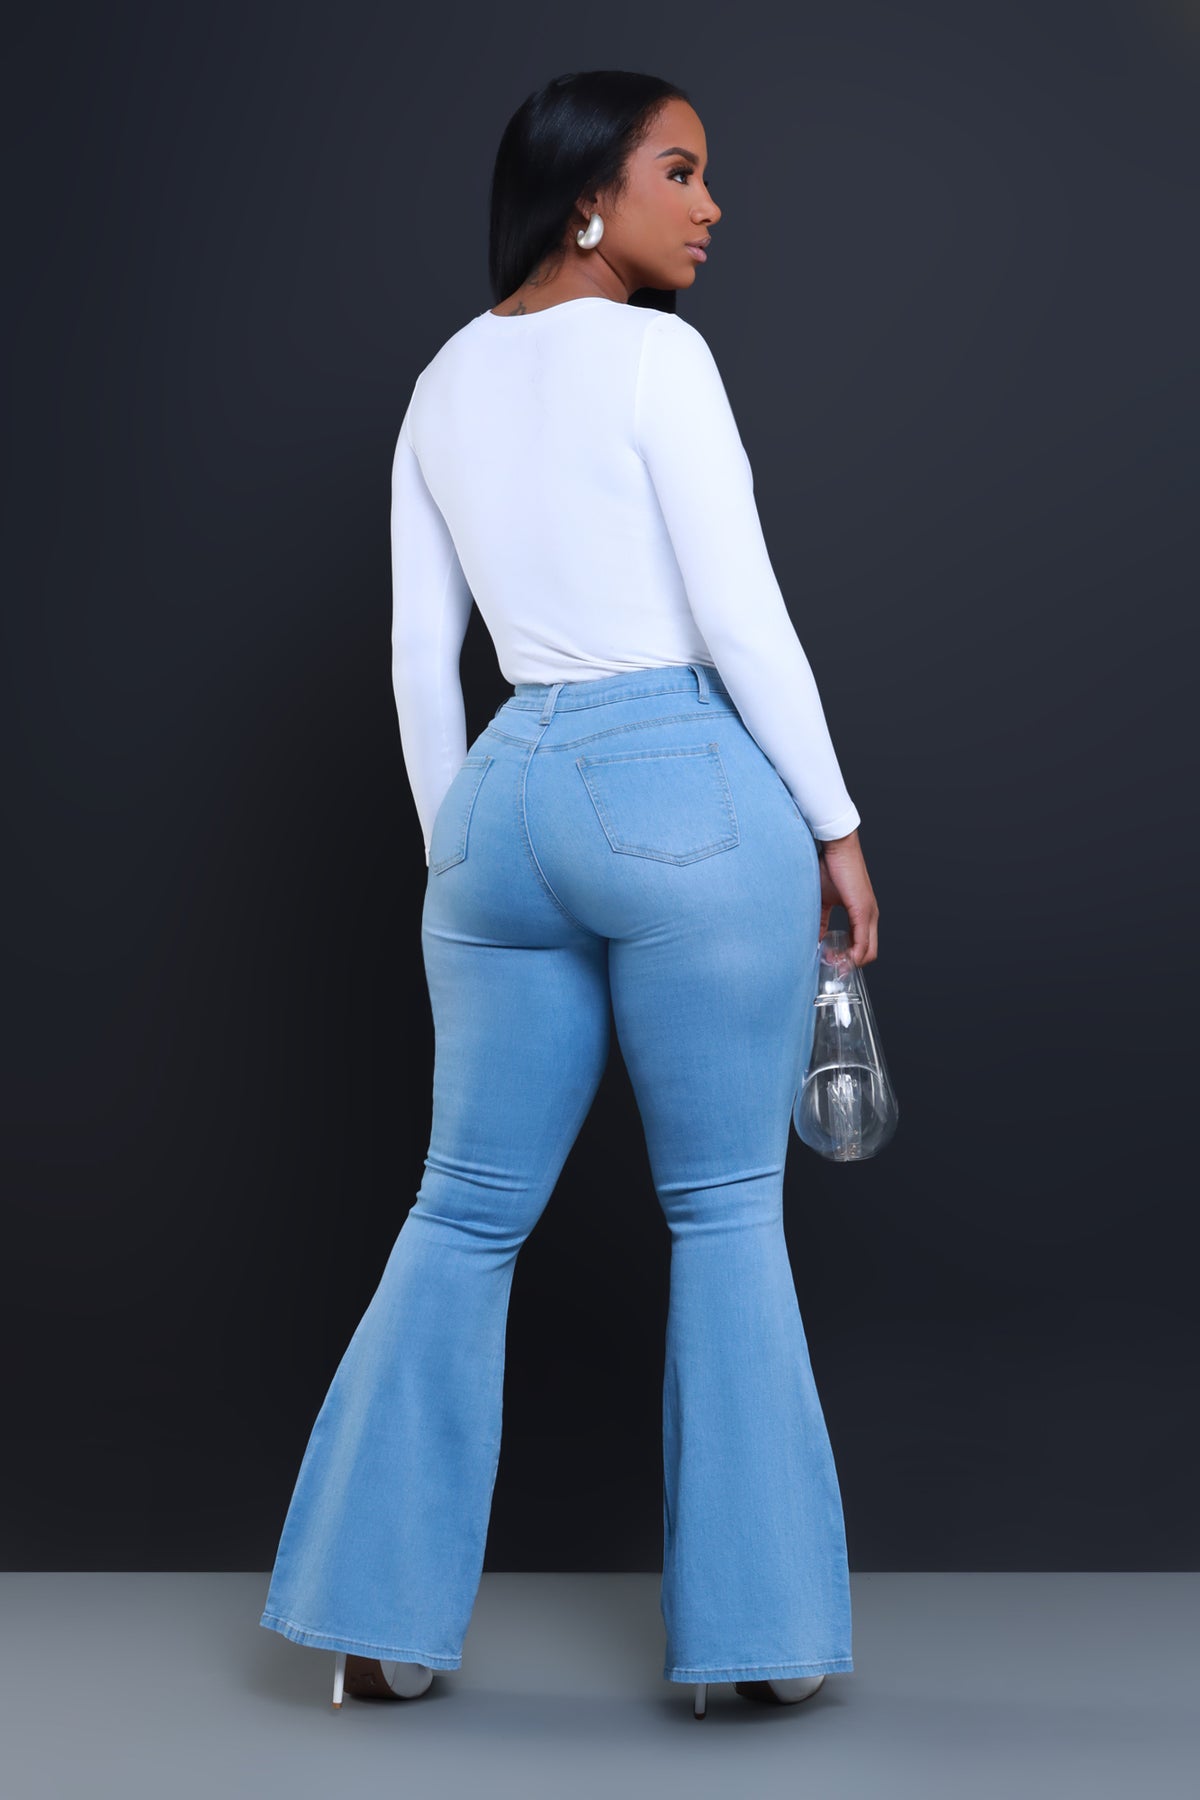 
              Bing High Waist Stretchy Bell Bottom Jeans - Light Wash - Swank A Posh
            